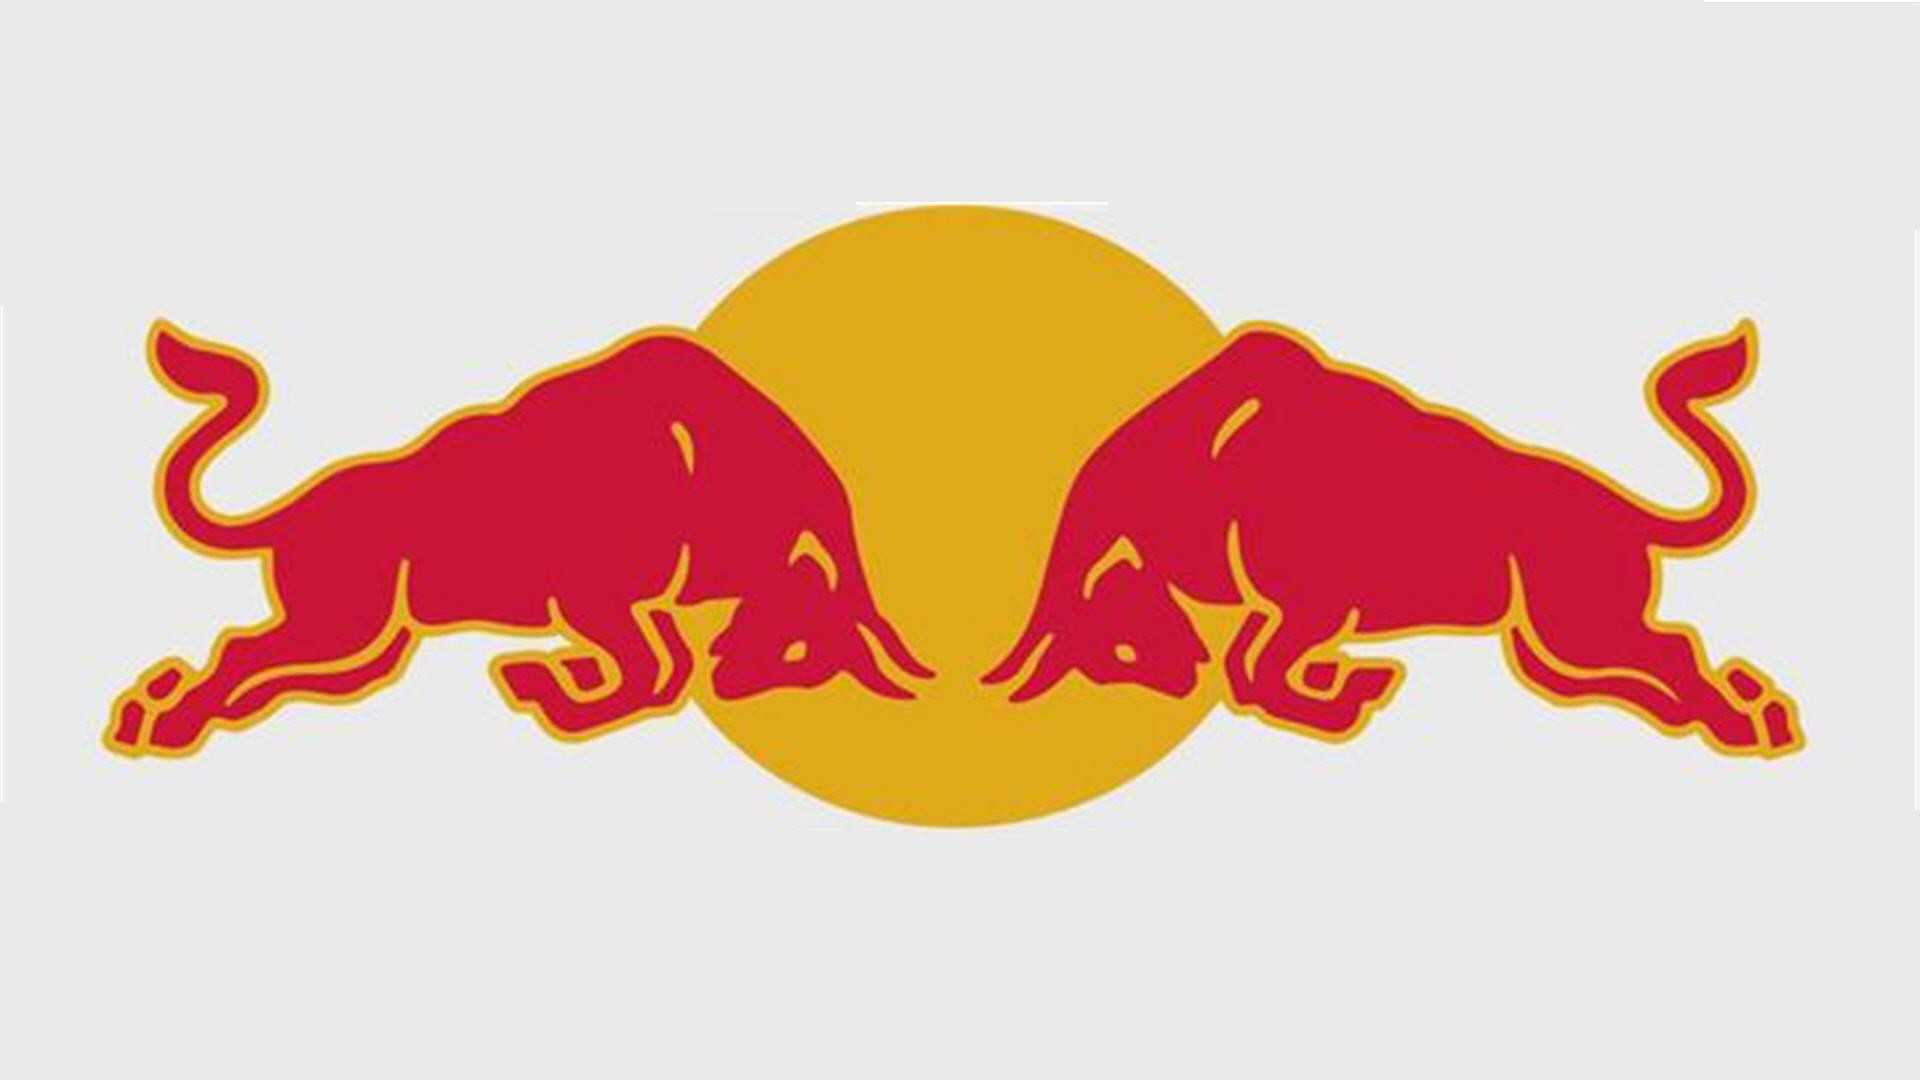 1920x1080 Amazing Logo Wallpaper HD Red Bull Image Gallery Free Download Logo